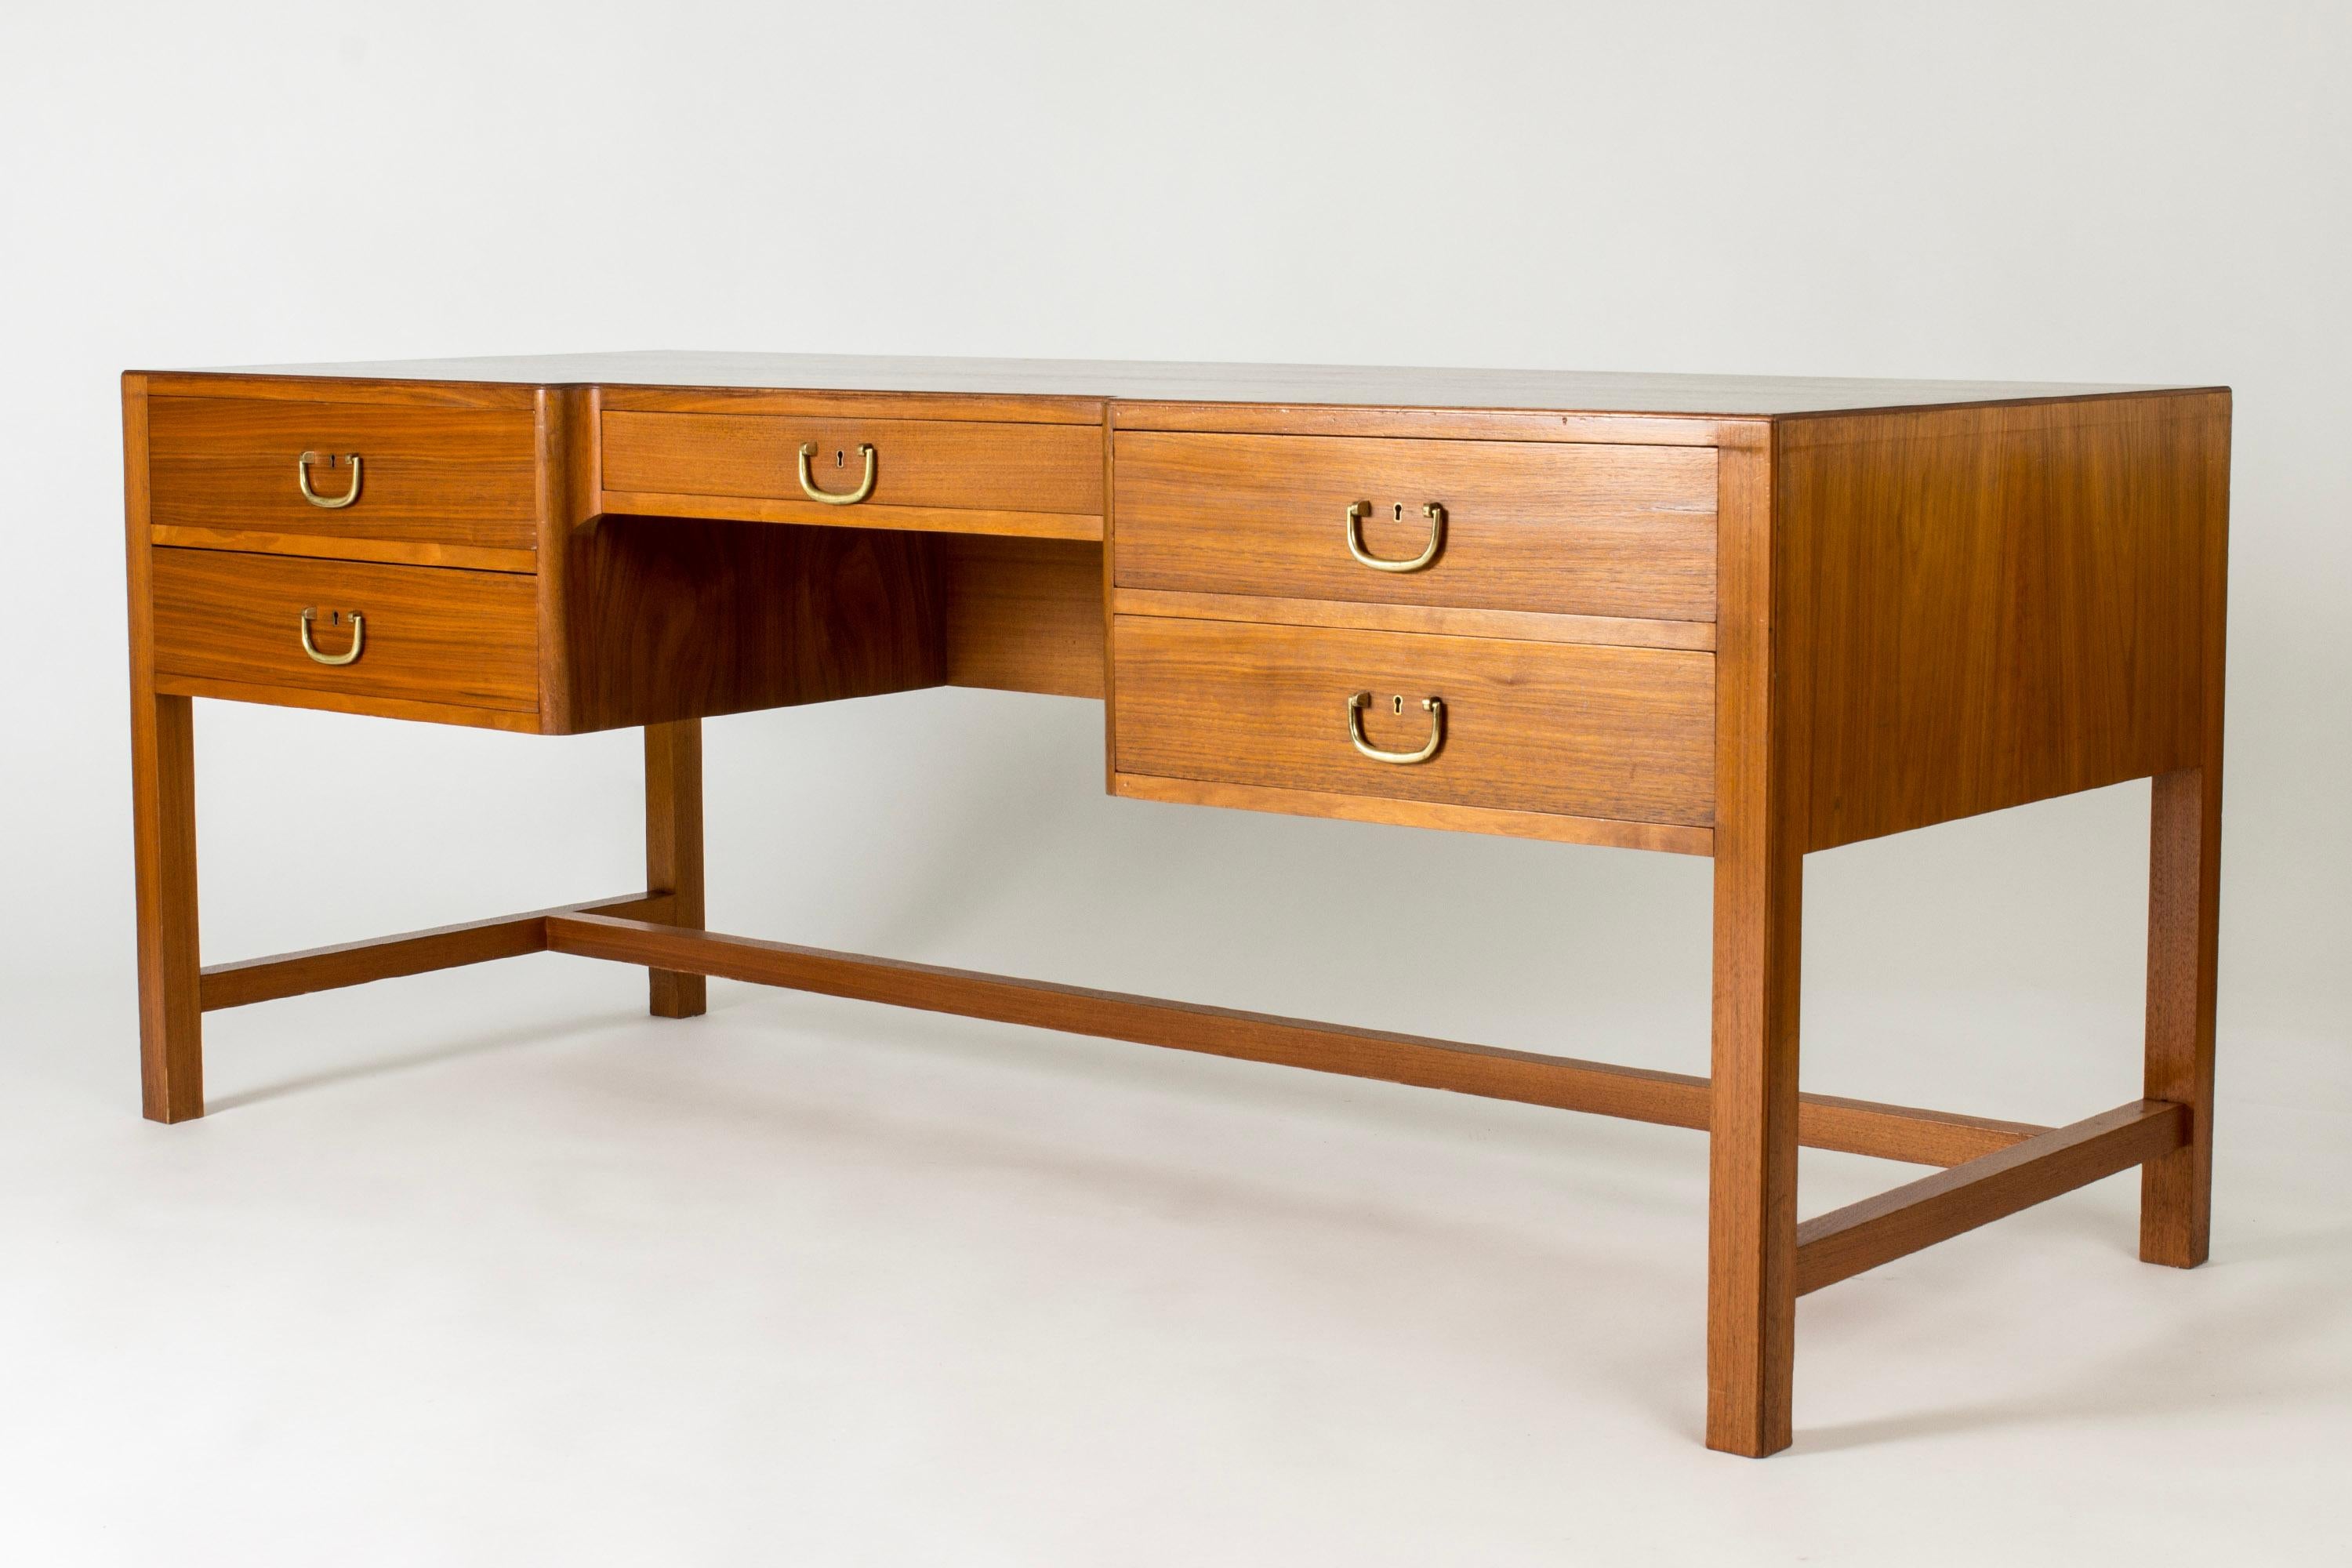 Large, elegant mahogany desk by Josef Frank. Beautiful veneer, warm in color. Brass handles.